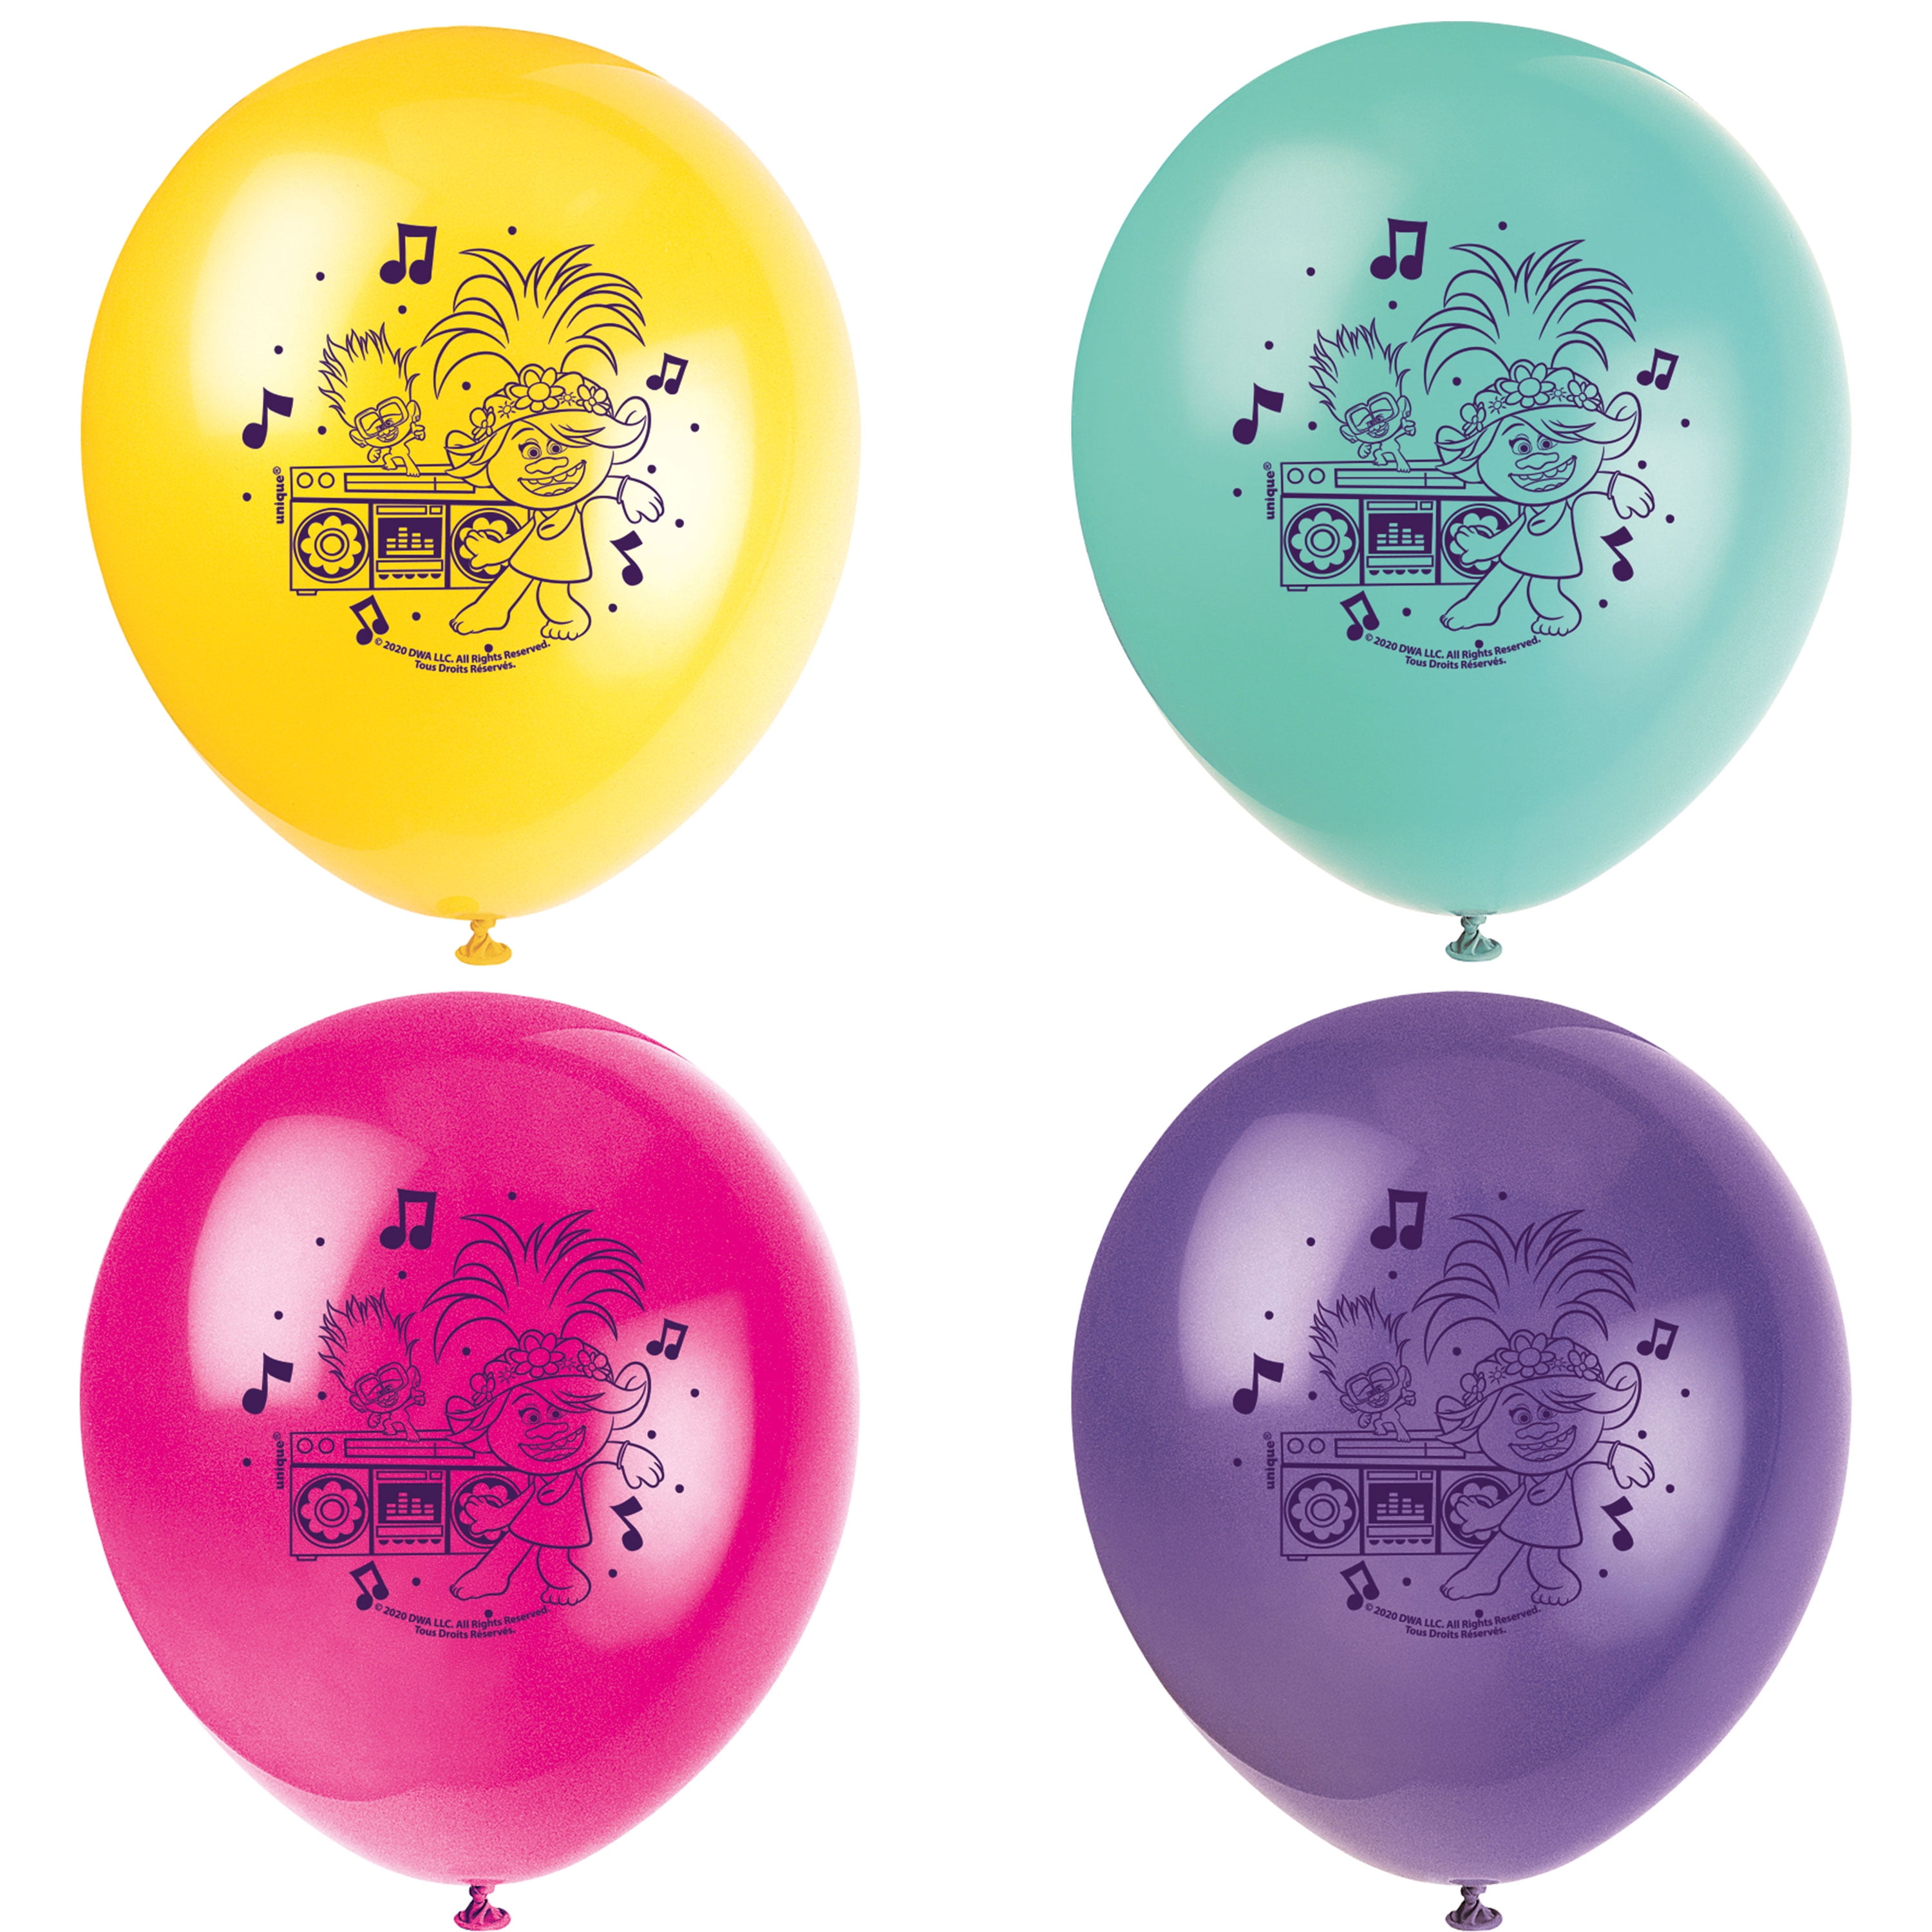 Details about   Trolls World Tour Party Supplies Jumbo Poppy Balloon Bouquet Decorations